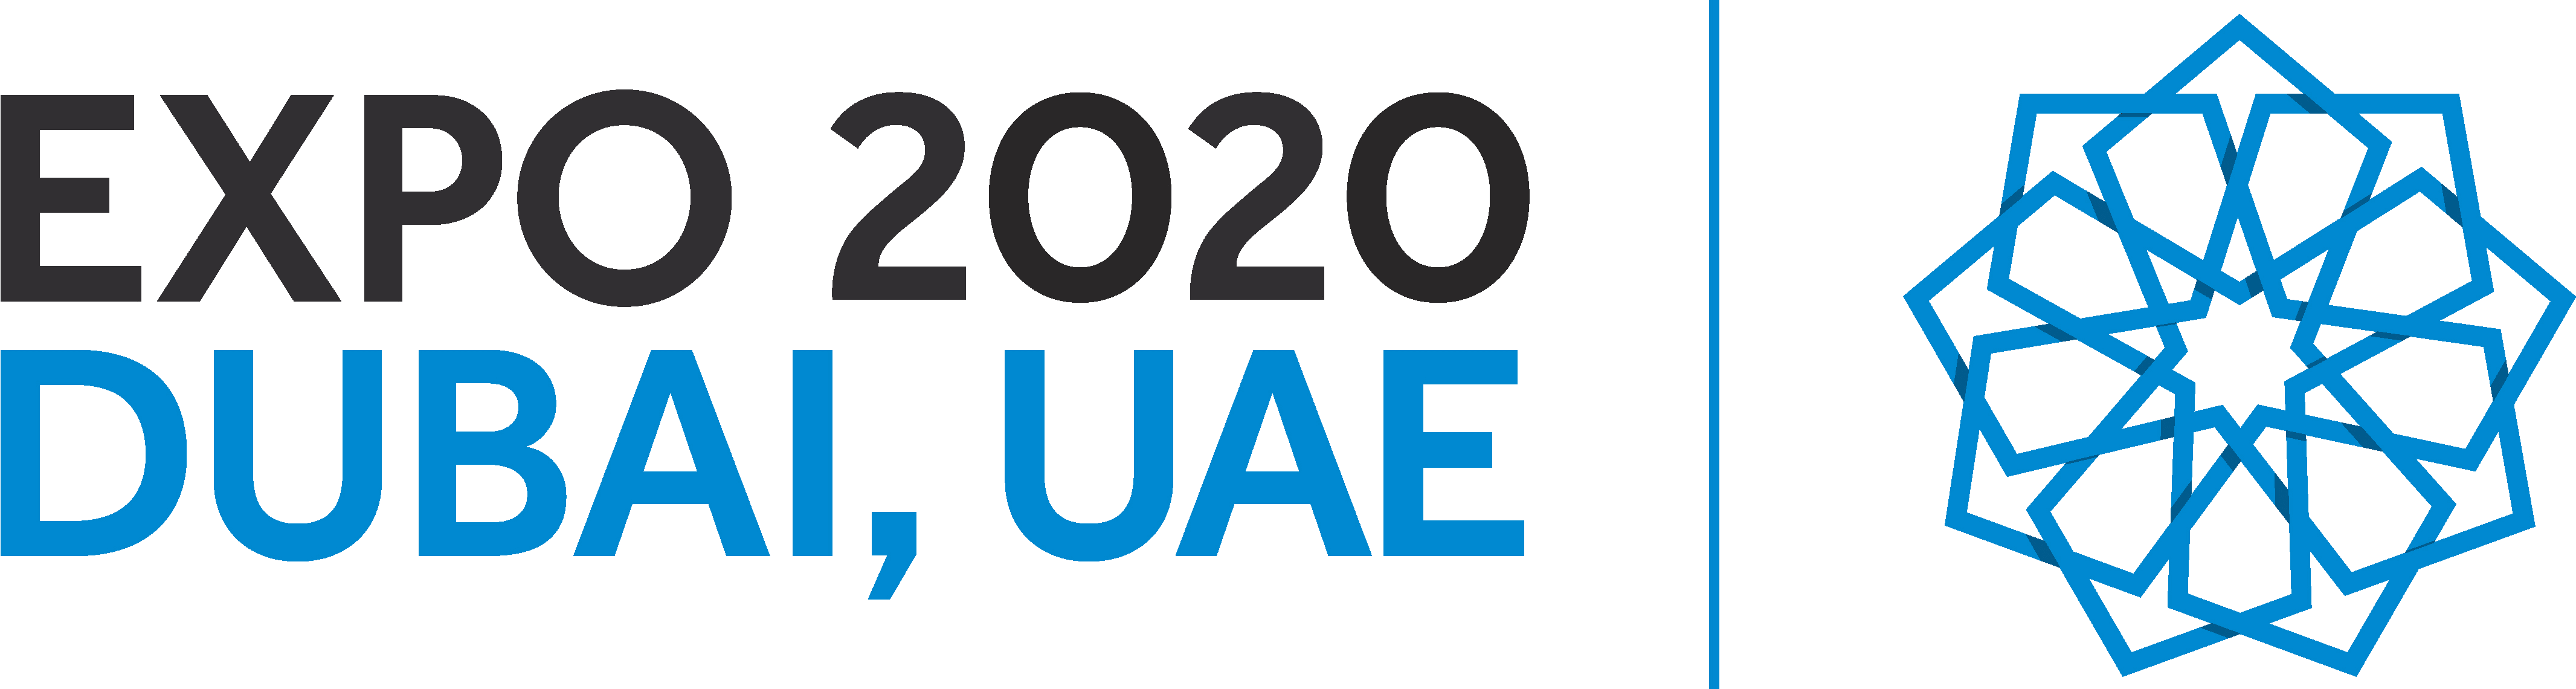 2020 logo png. Expo 2020 лого. Дубай Экспо логотип. Expo 2020 Dubai надпись. Экспо 2020 с надписью.